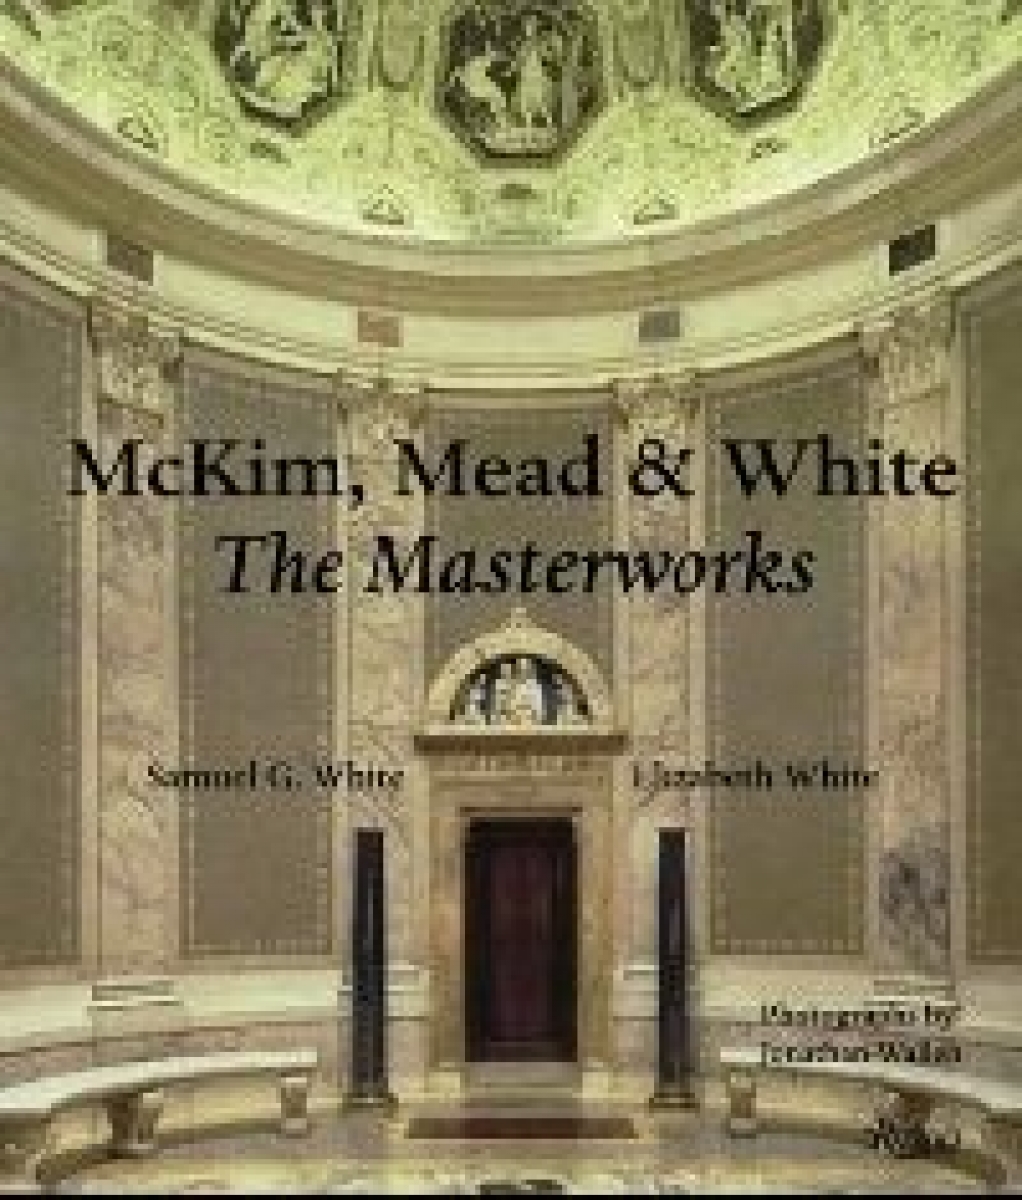 Samuel G. White McKim, Mead & White 